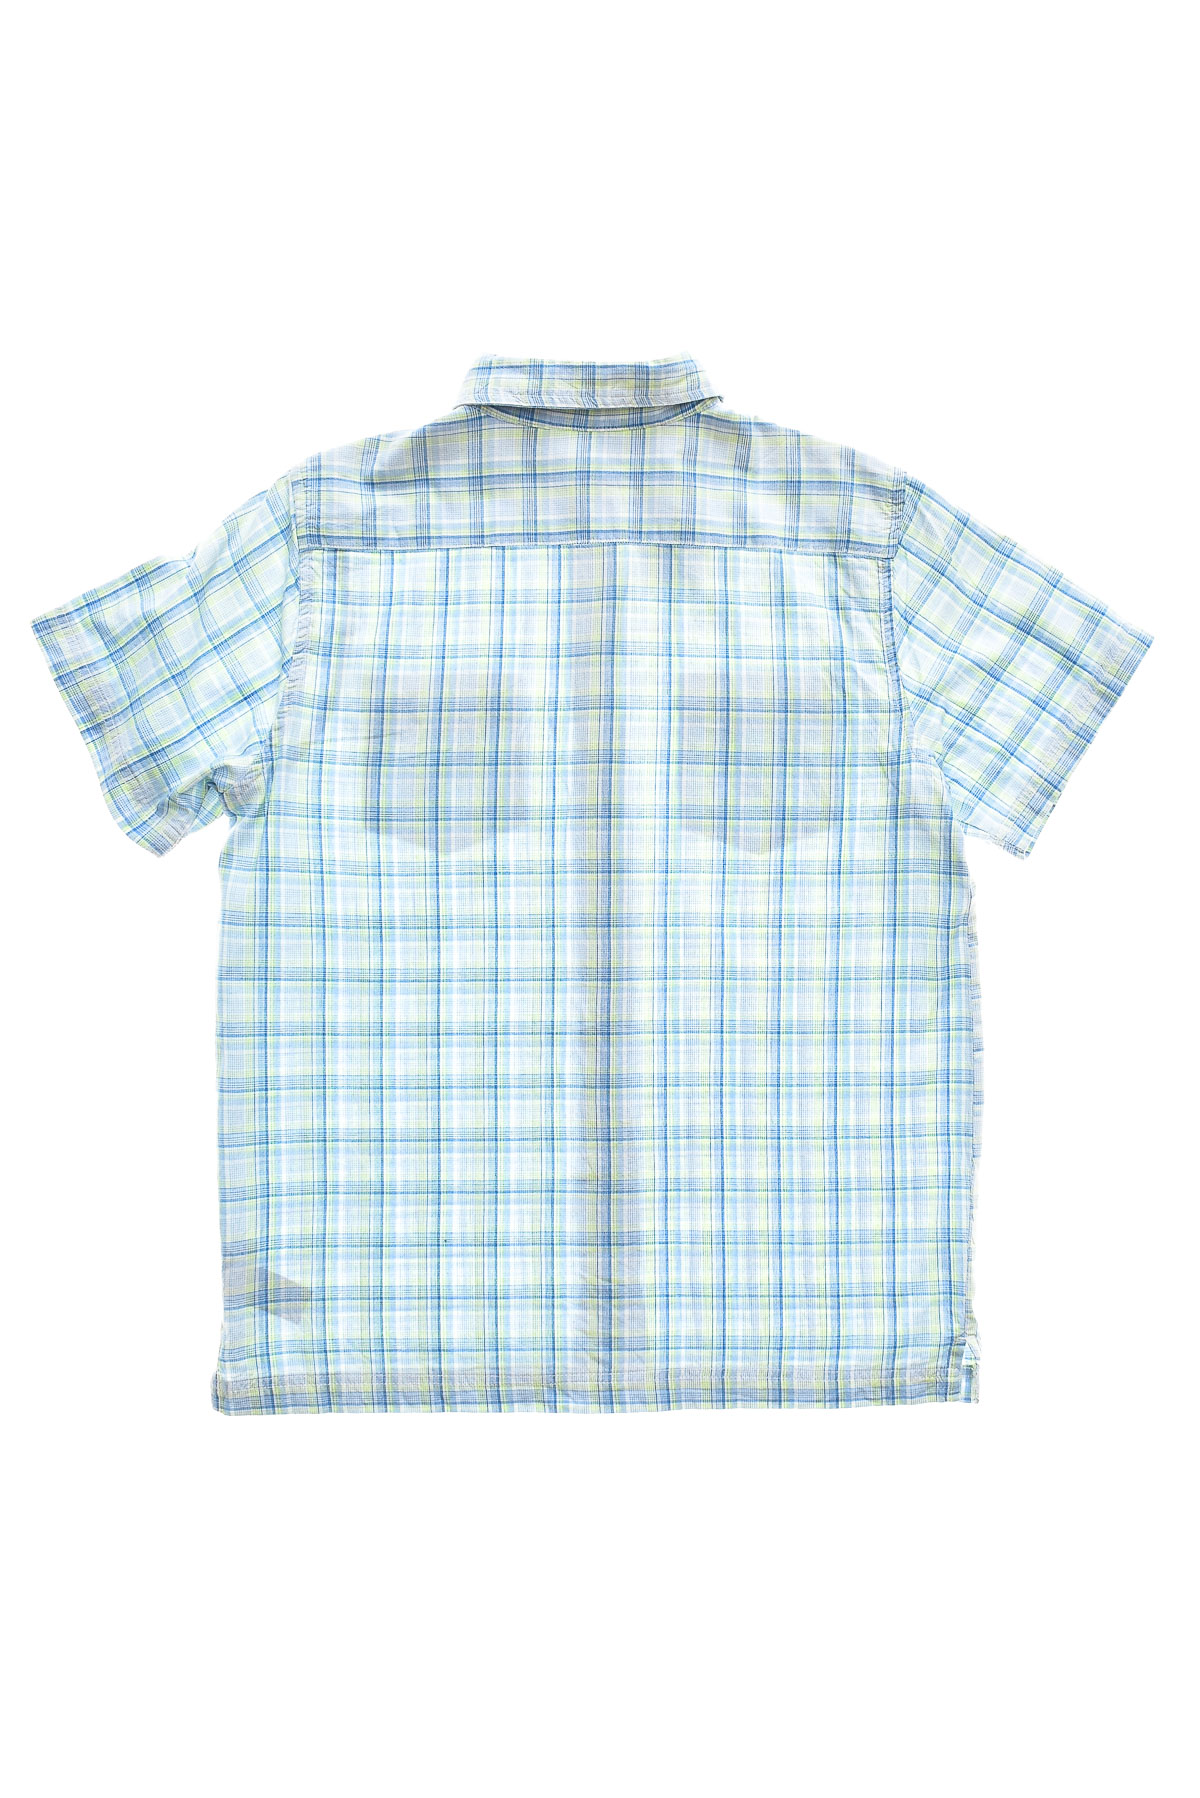 Men's shirt - CHEROKEE - 1